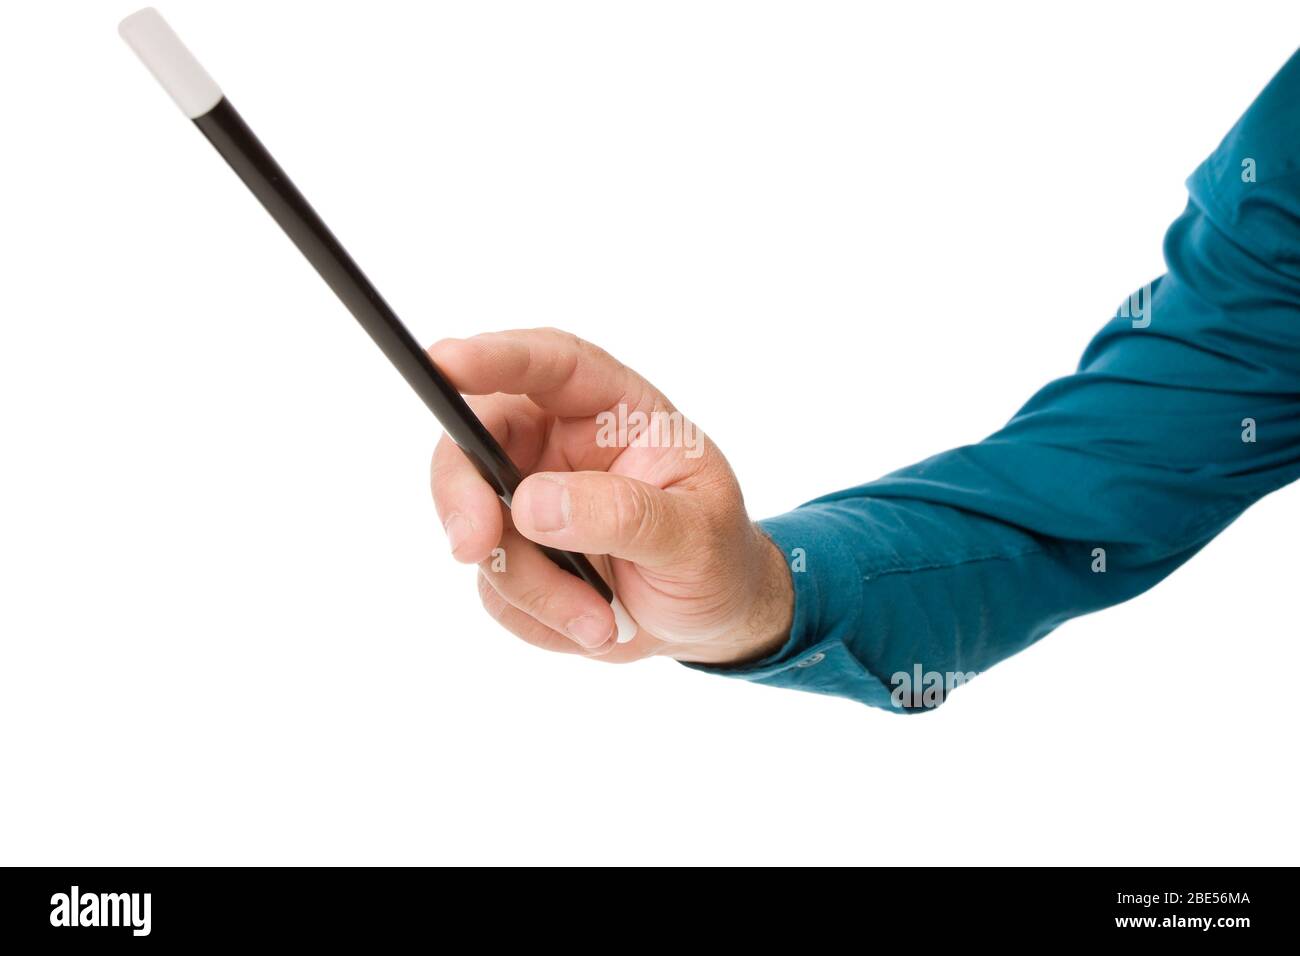 A close up of an arm waving a magic wand. Stock Photo